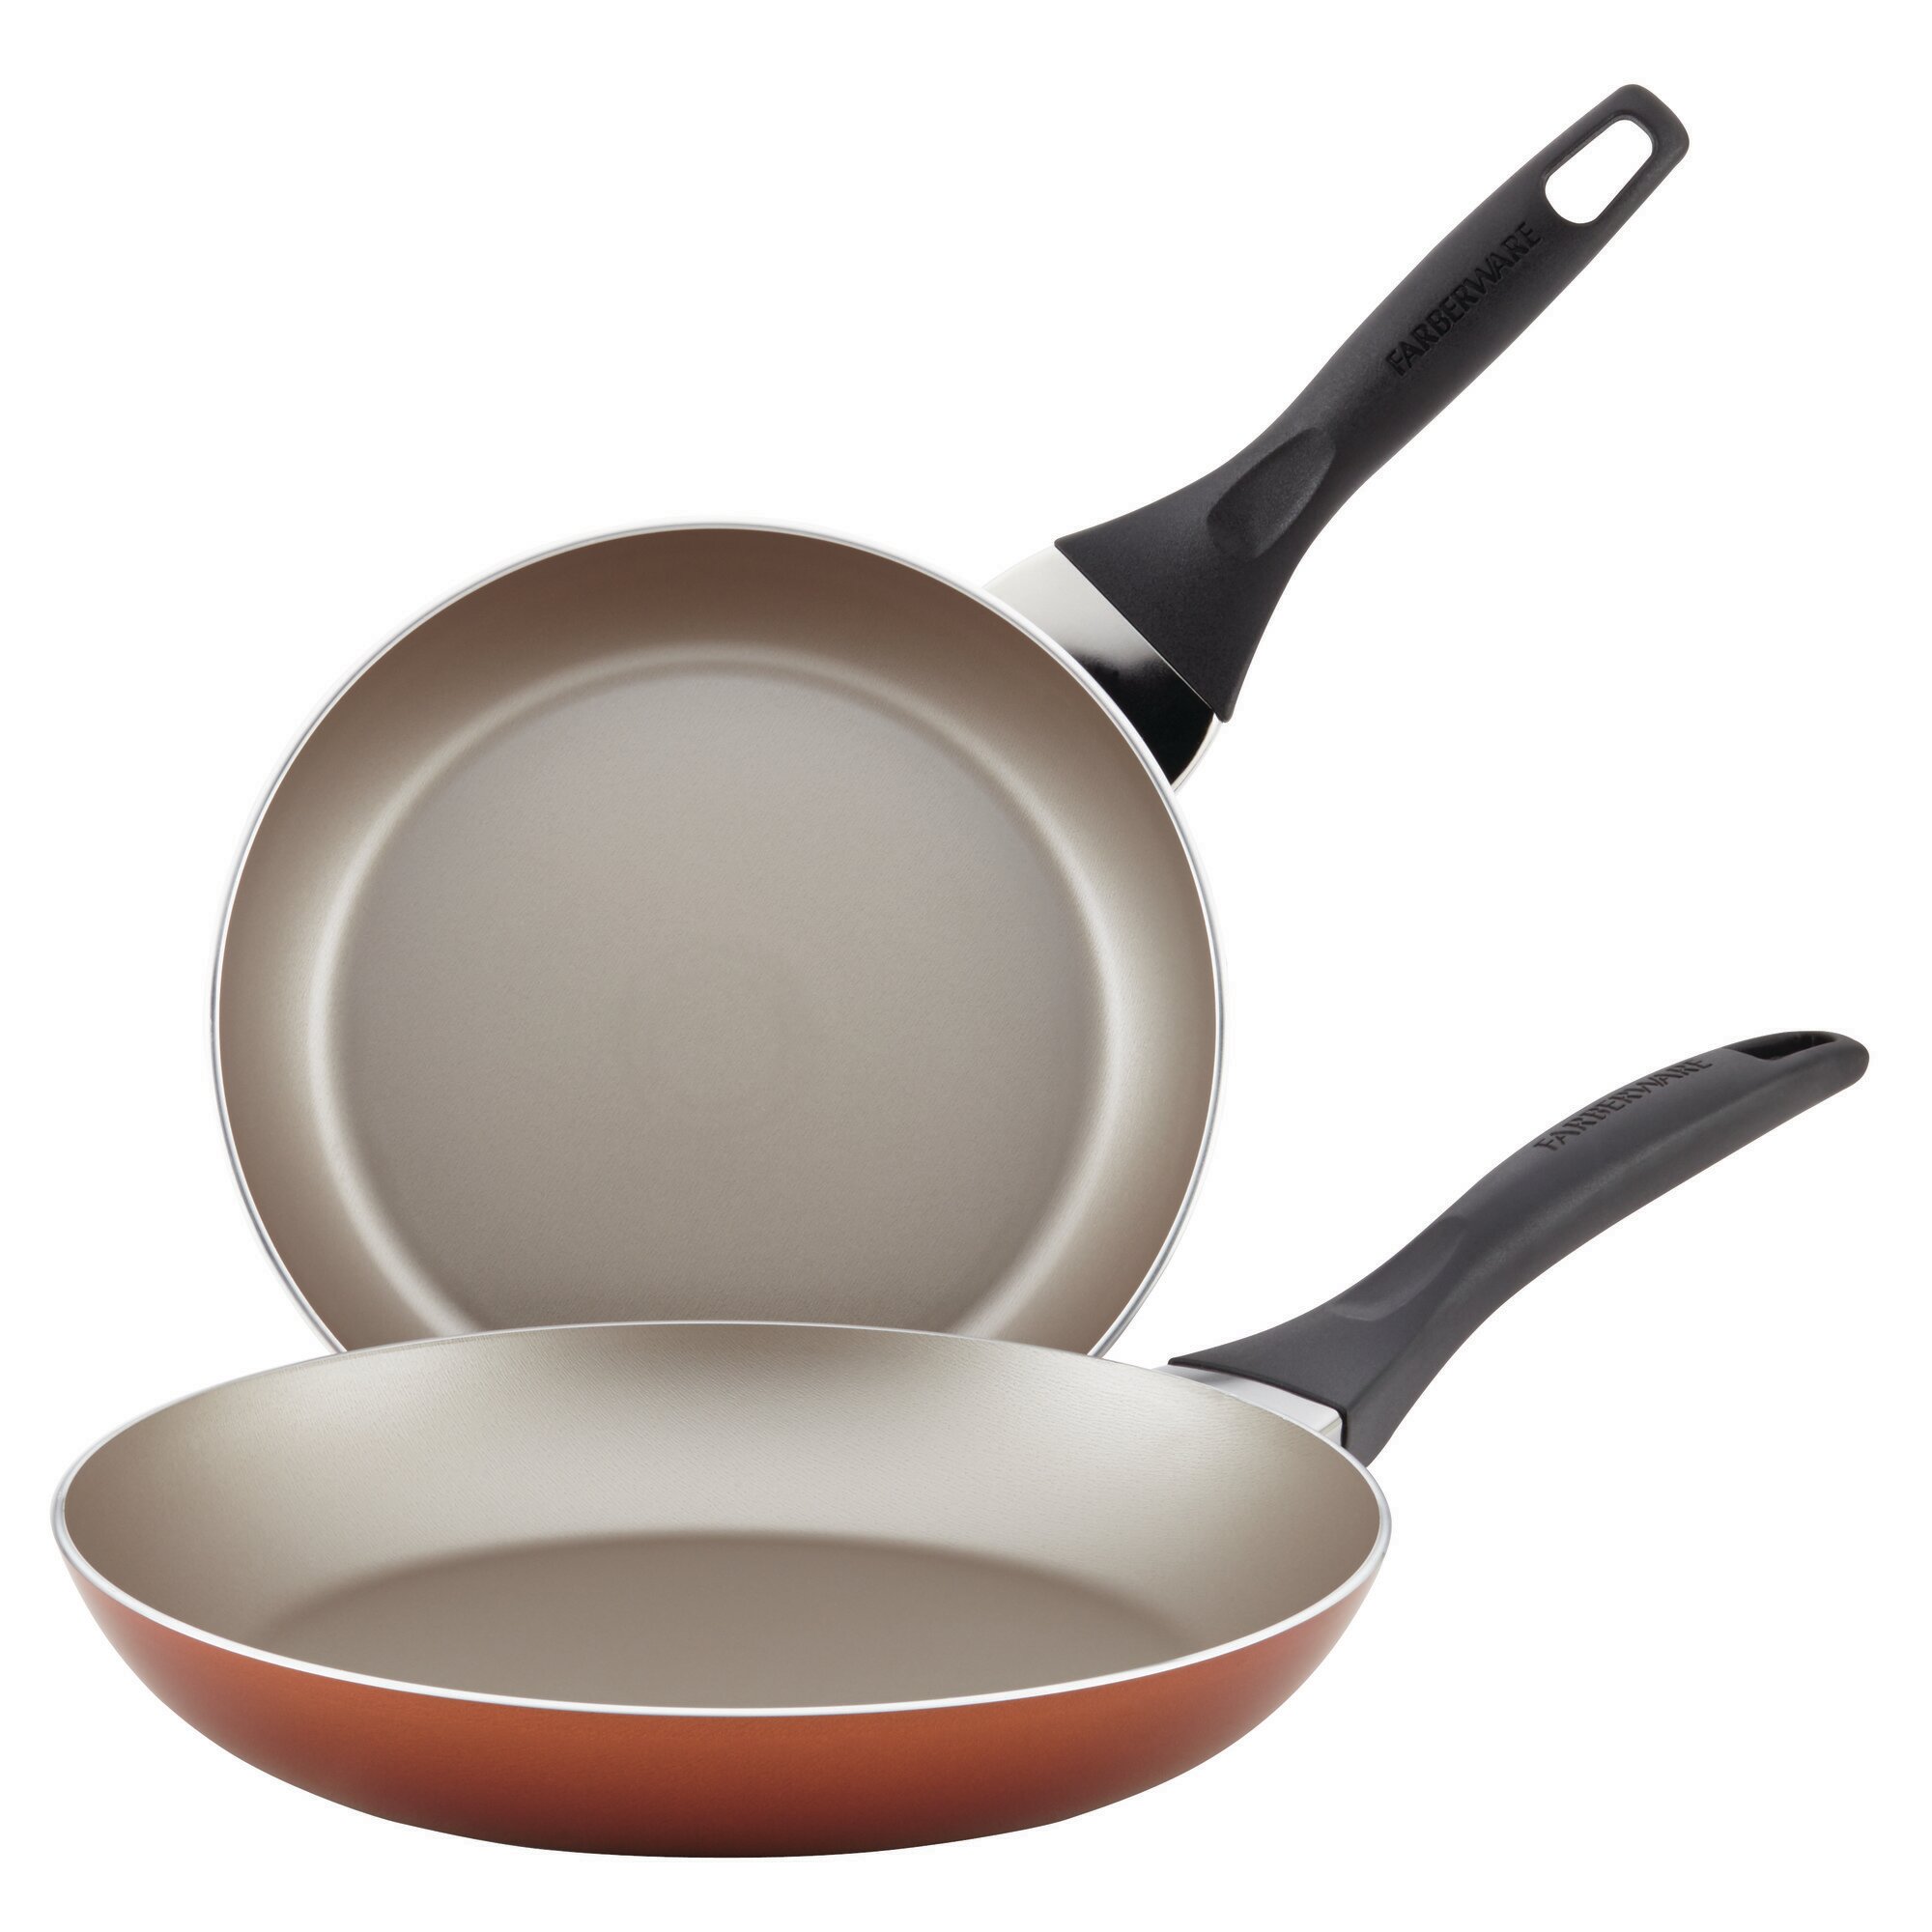  Farberware Glide Nonstick Frying Pan / Fry Pan / Skillet - 10  Inch, Black : Home & Kitchen